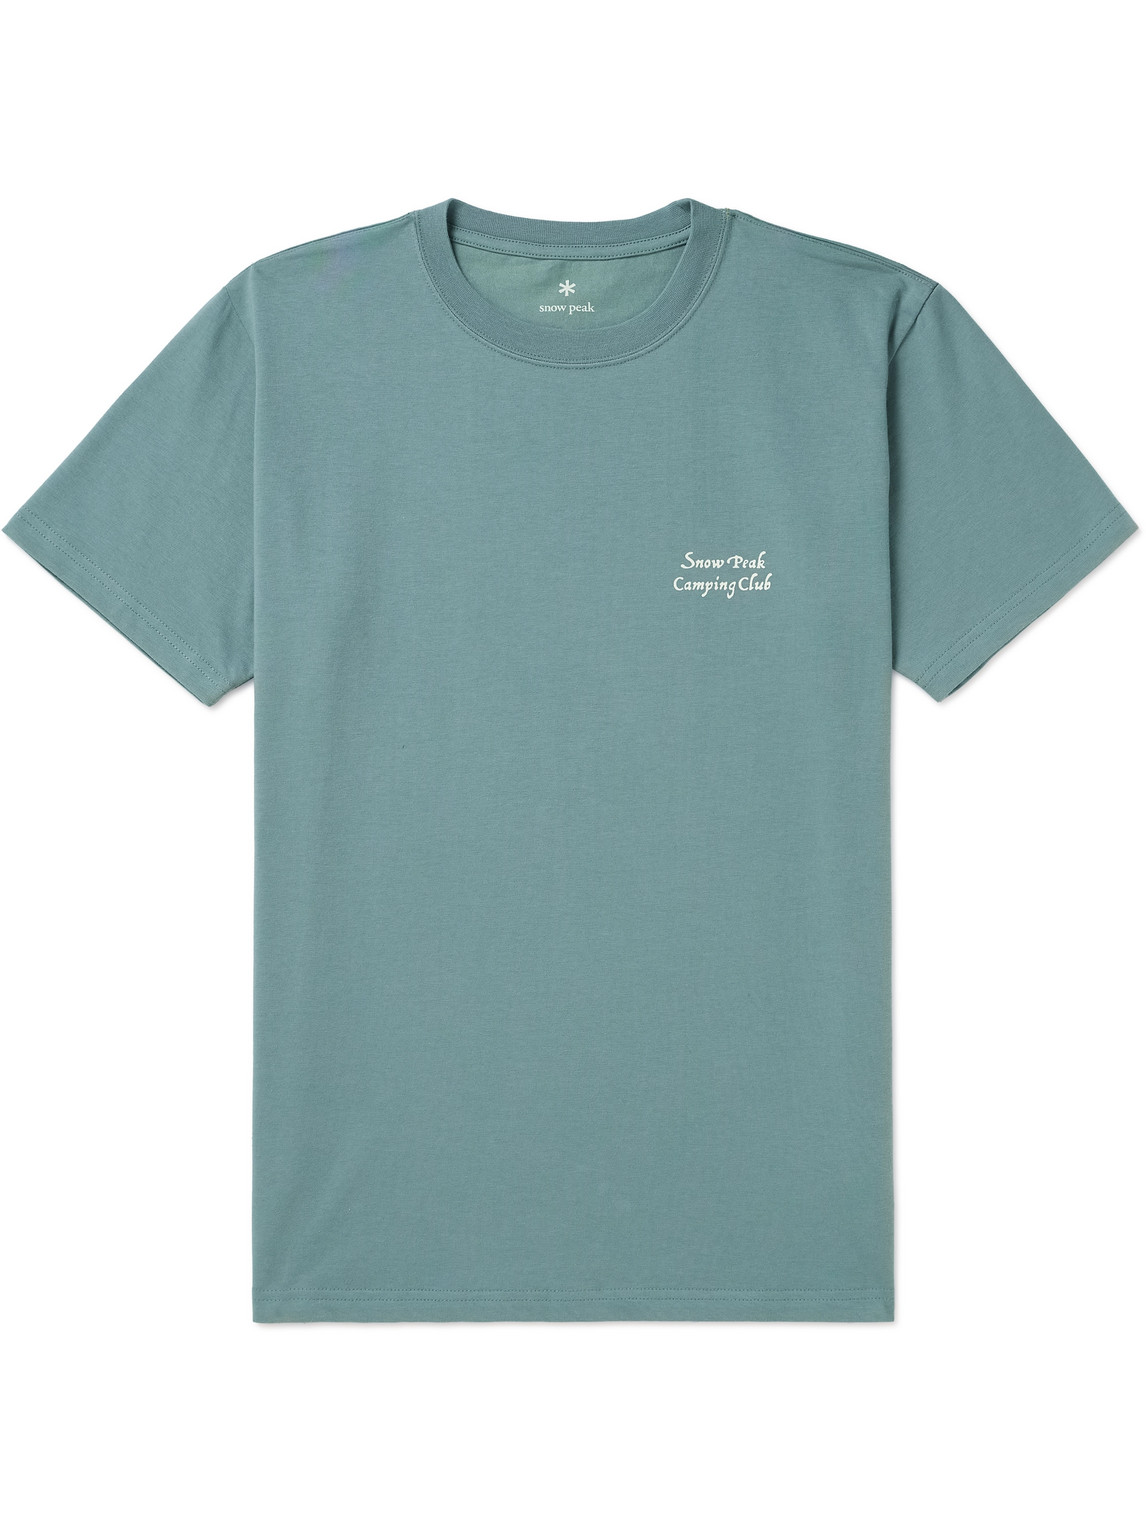 Camping Club Cotton-Blend Jersey T-Shirt